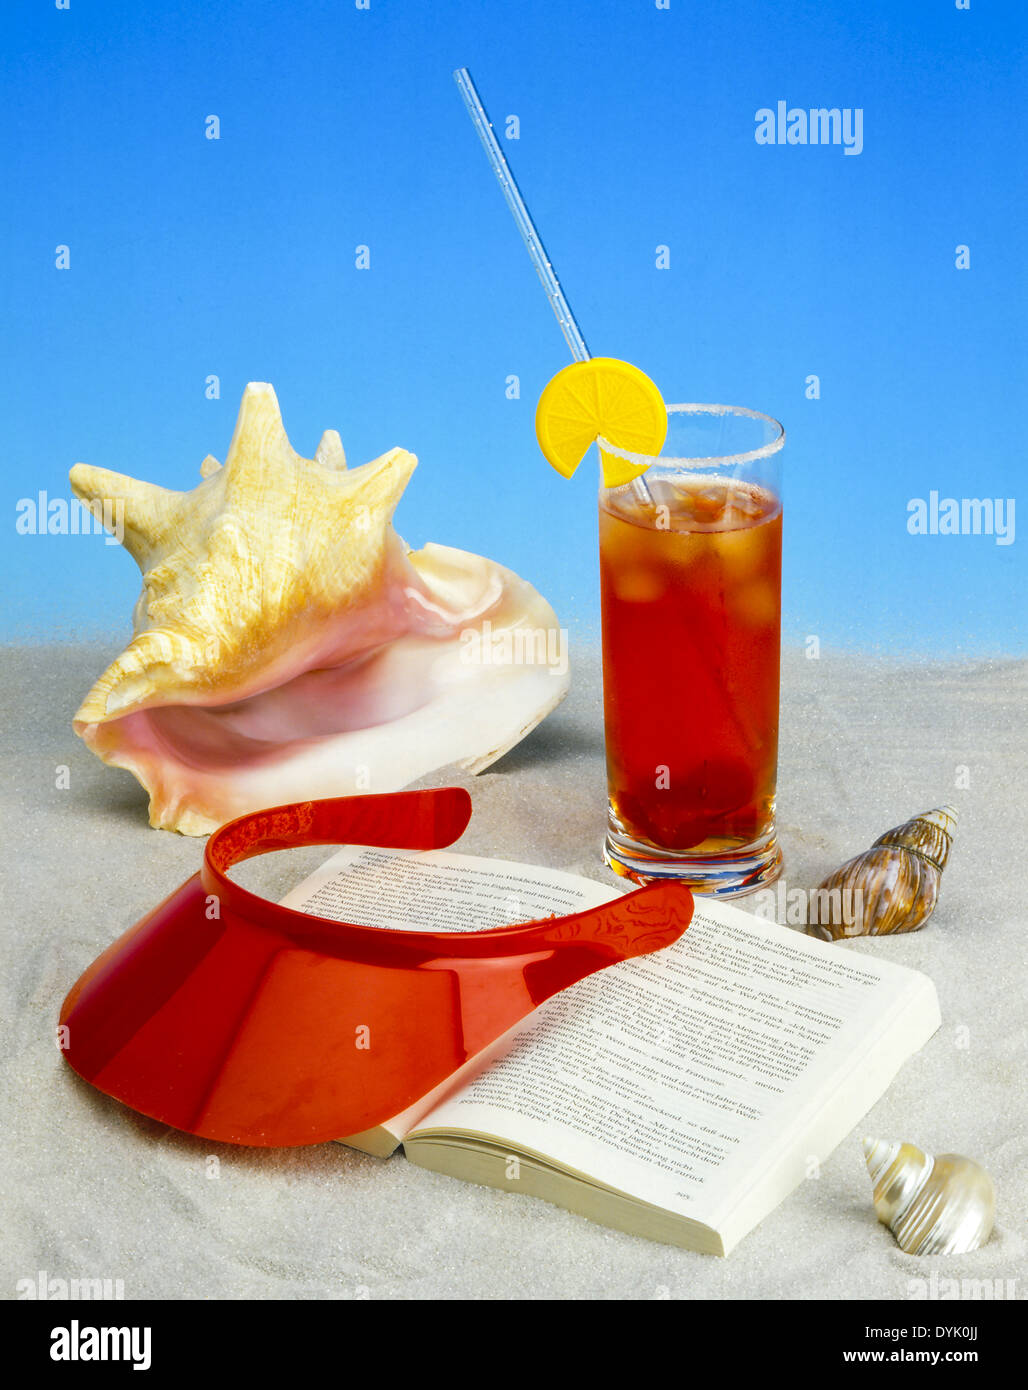 Urlaubsutensilien am Strand Sommerurlaub Holiday utensils at the beach summer vacation Beach Seashell Shell Shells Drink Stock Photo